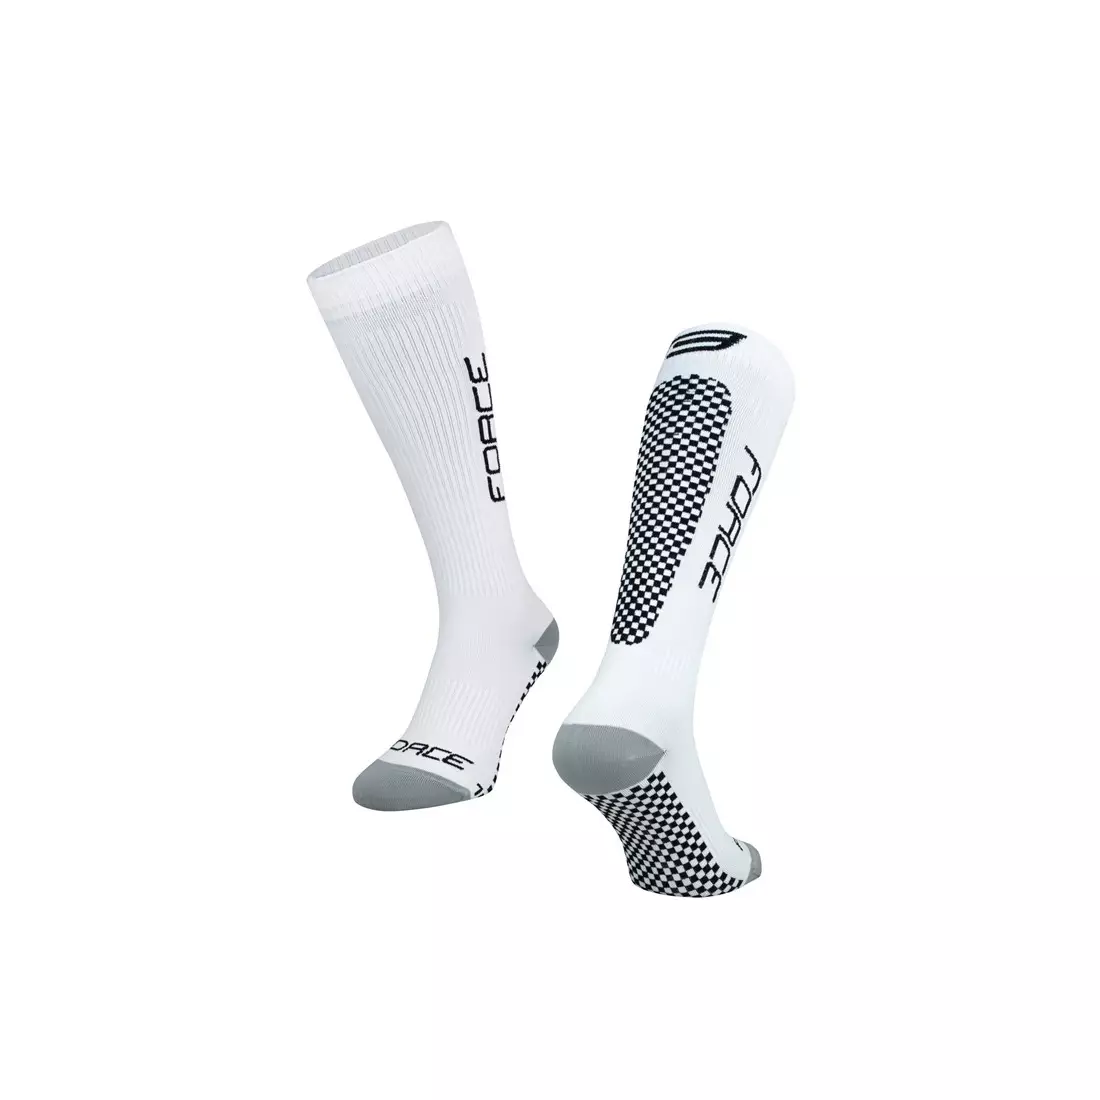 FORCE TESSERA COMPRESSION compression socks, black and white